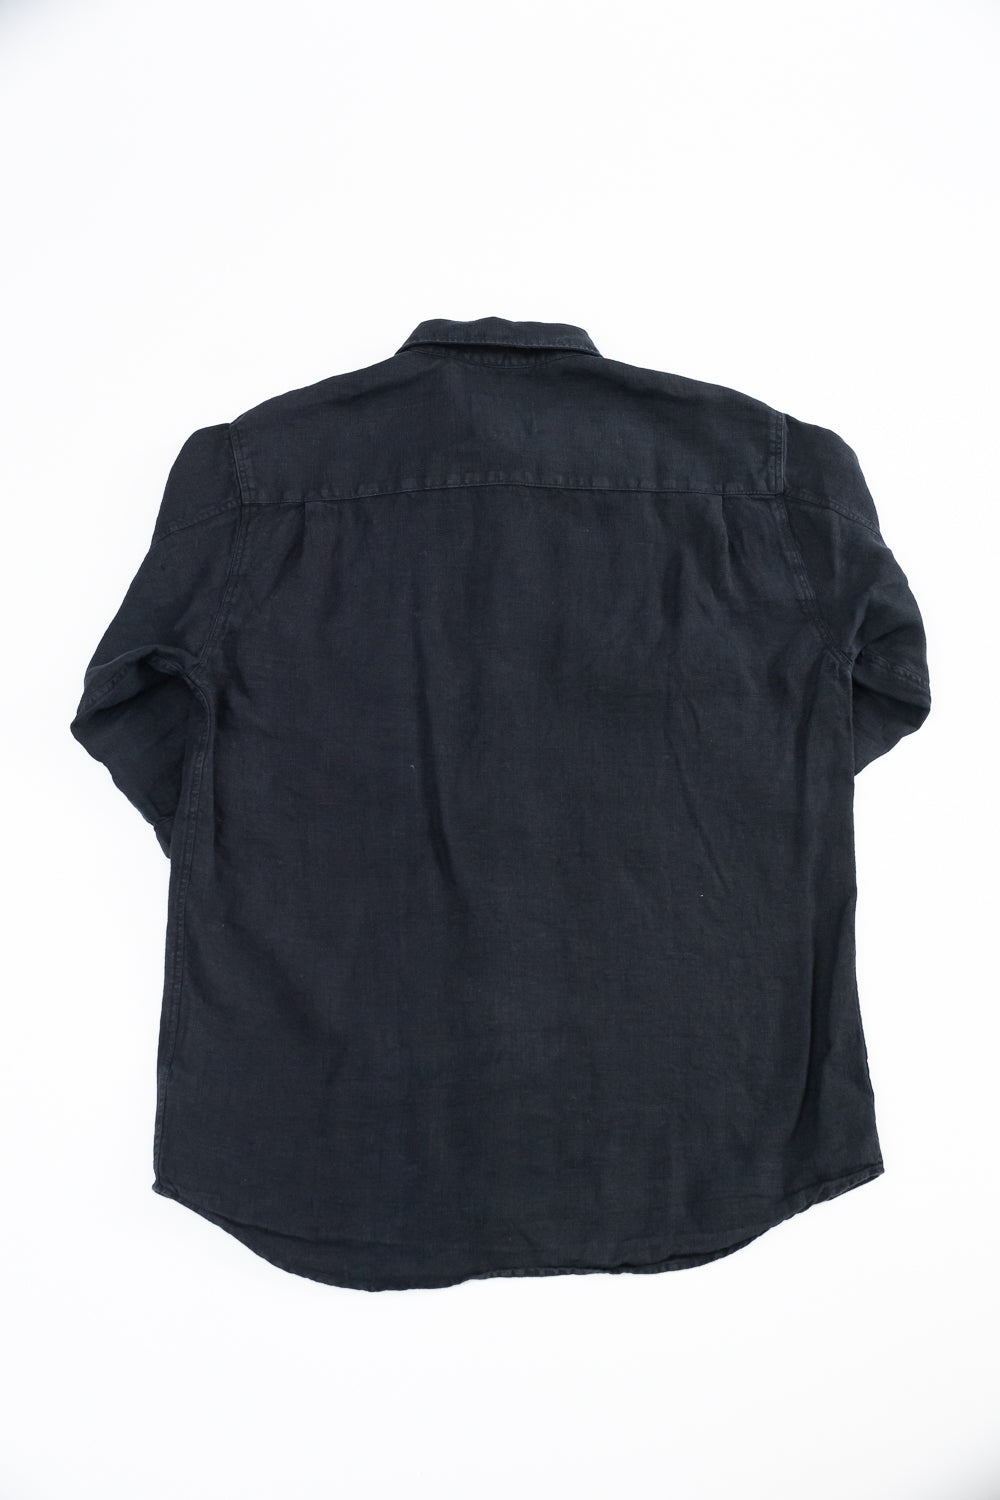 Delray Linen Shirt - Black